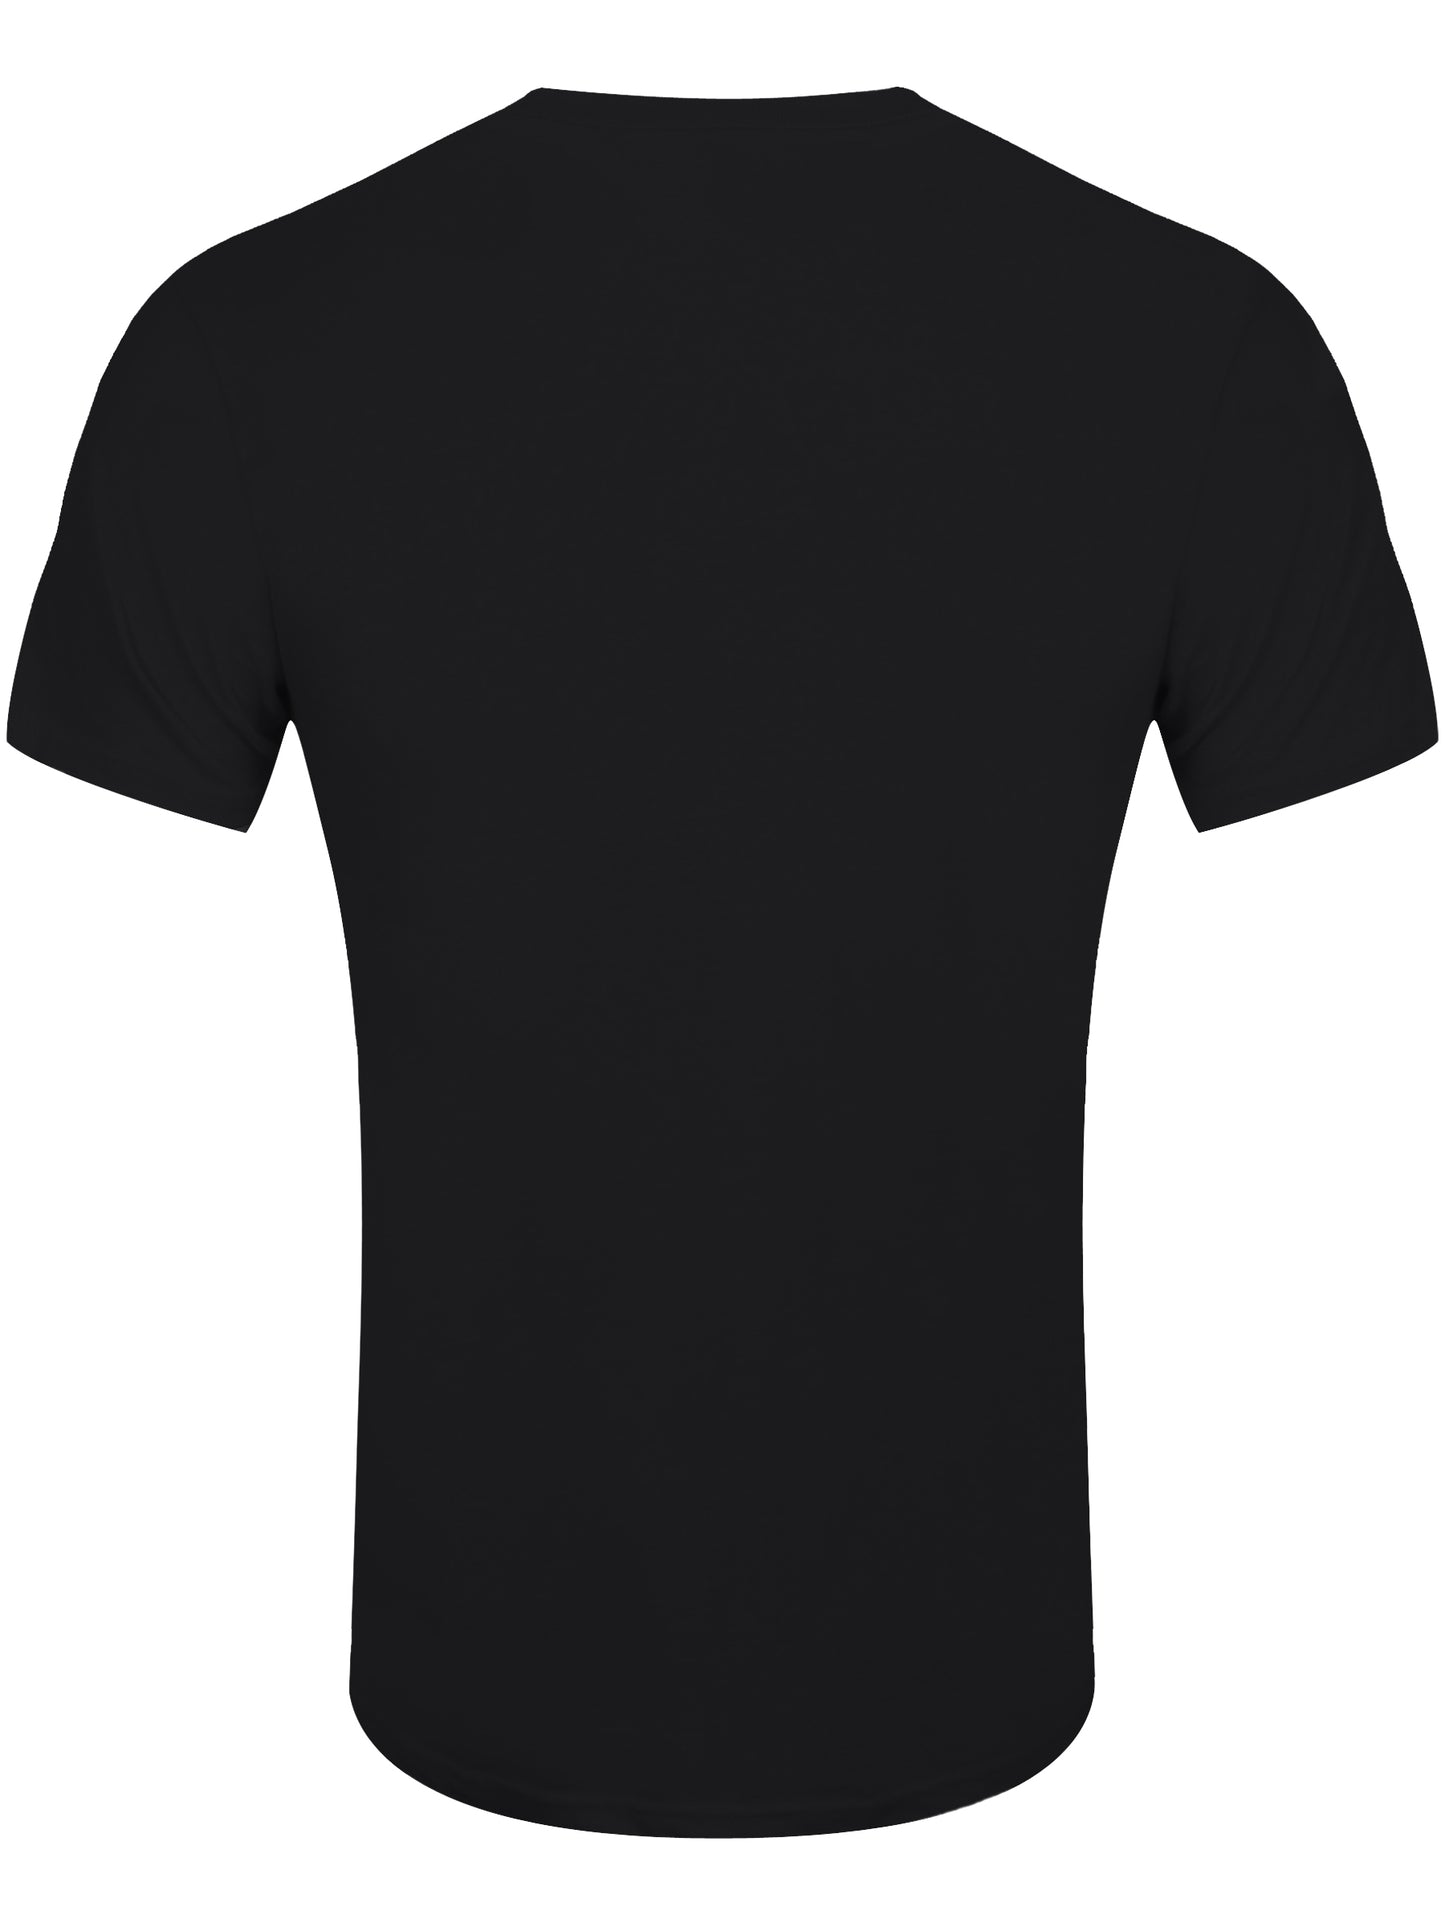 Star Wars Mandalorian Distressed Crest Men's Black T-Shirt